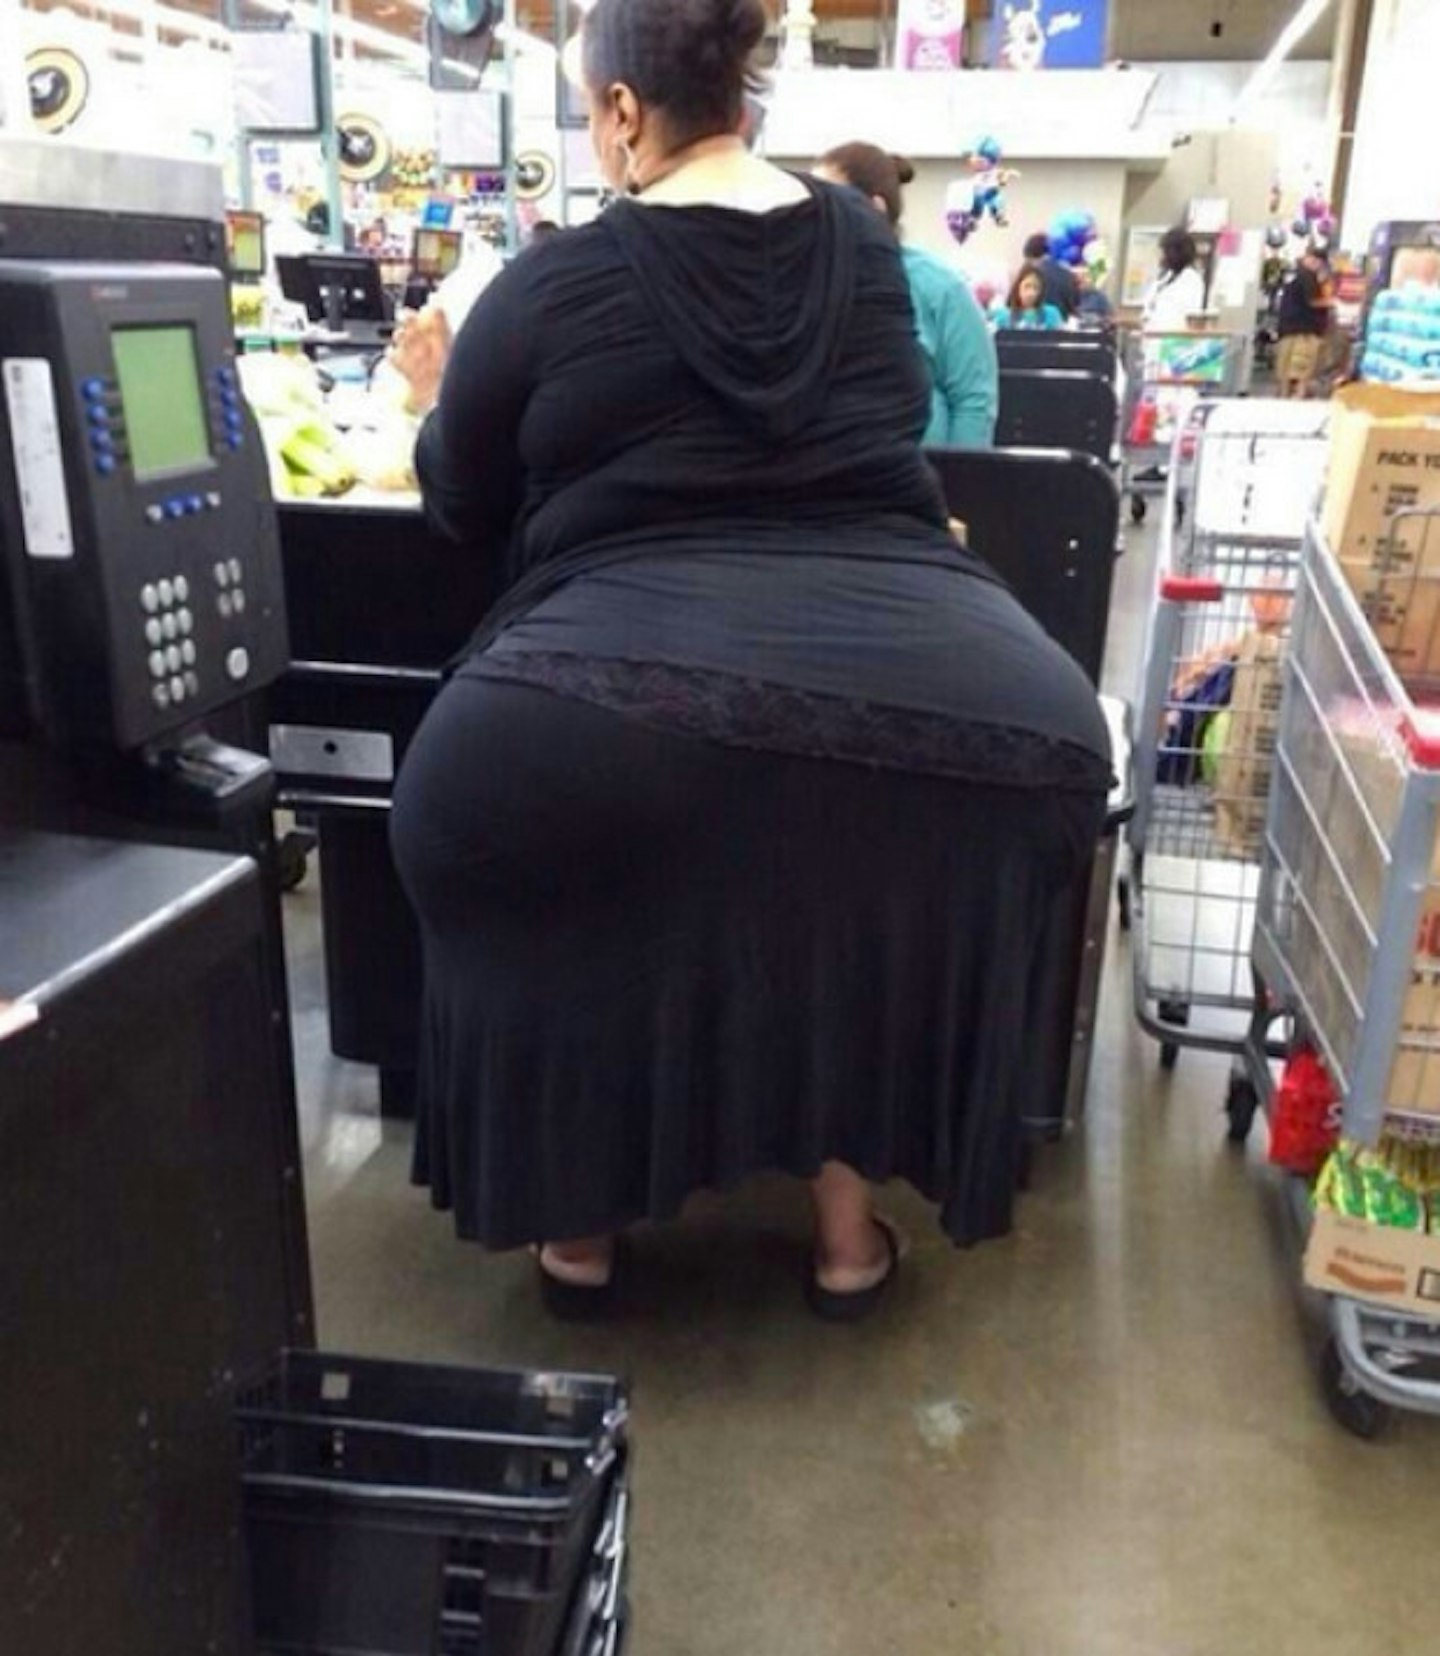 This lady's bum...